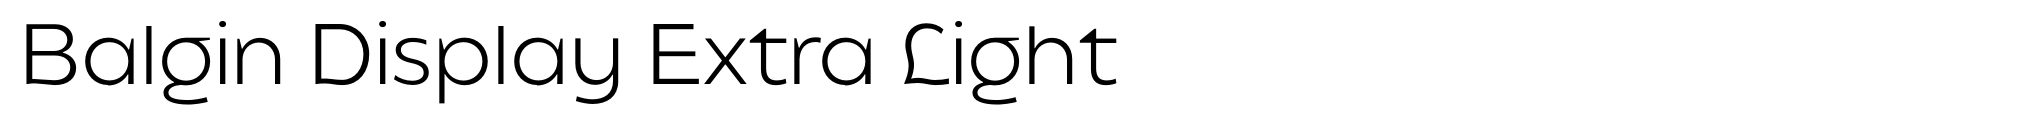 Balgin Display Extra Light image